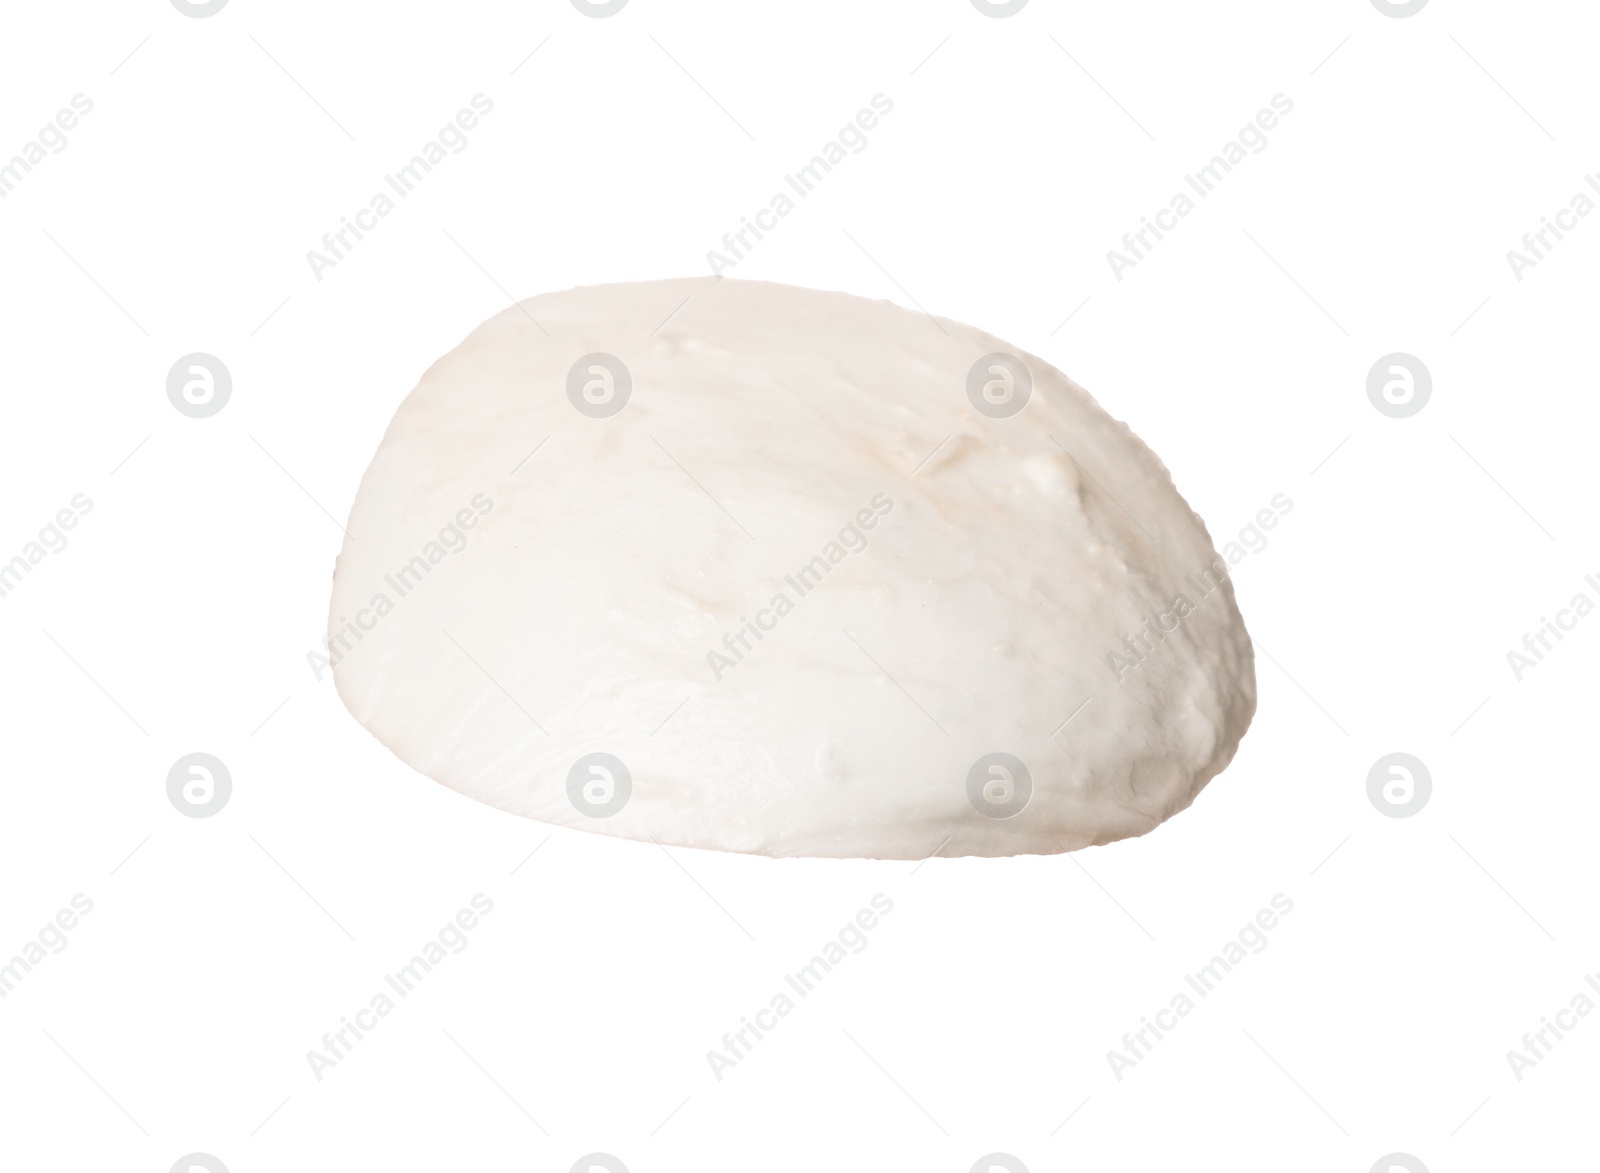 Photo of Slice of mozzarella cheese isolated on white